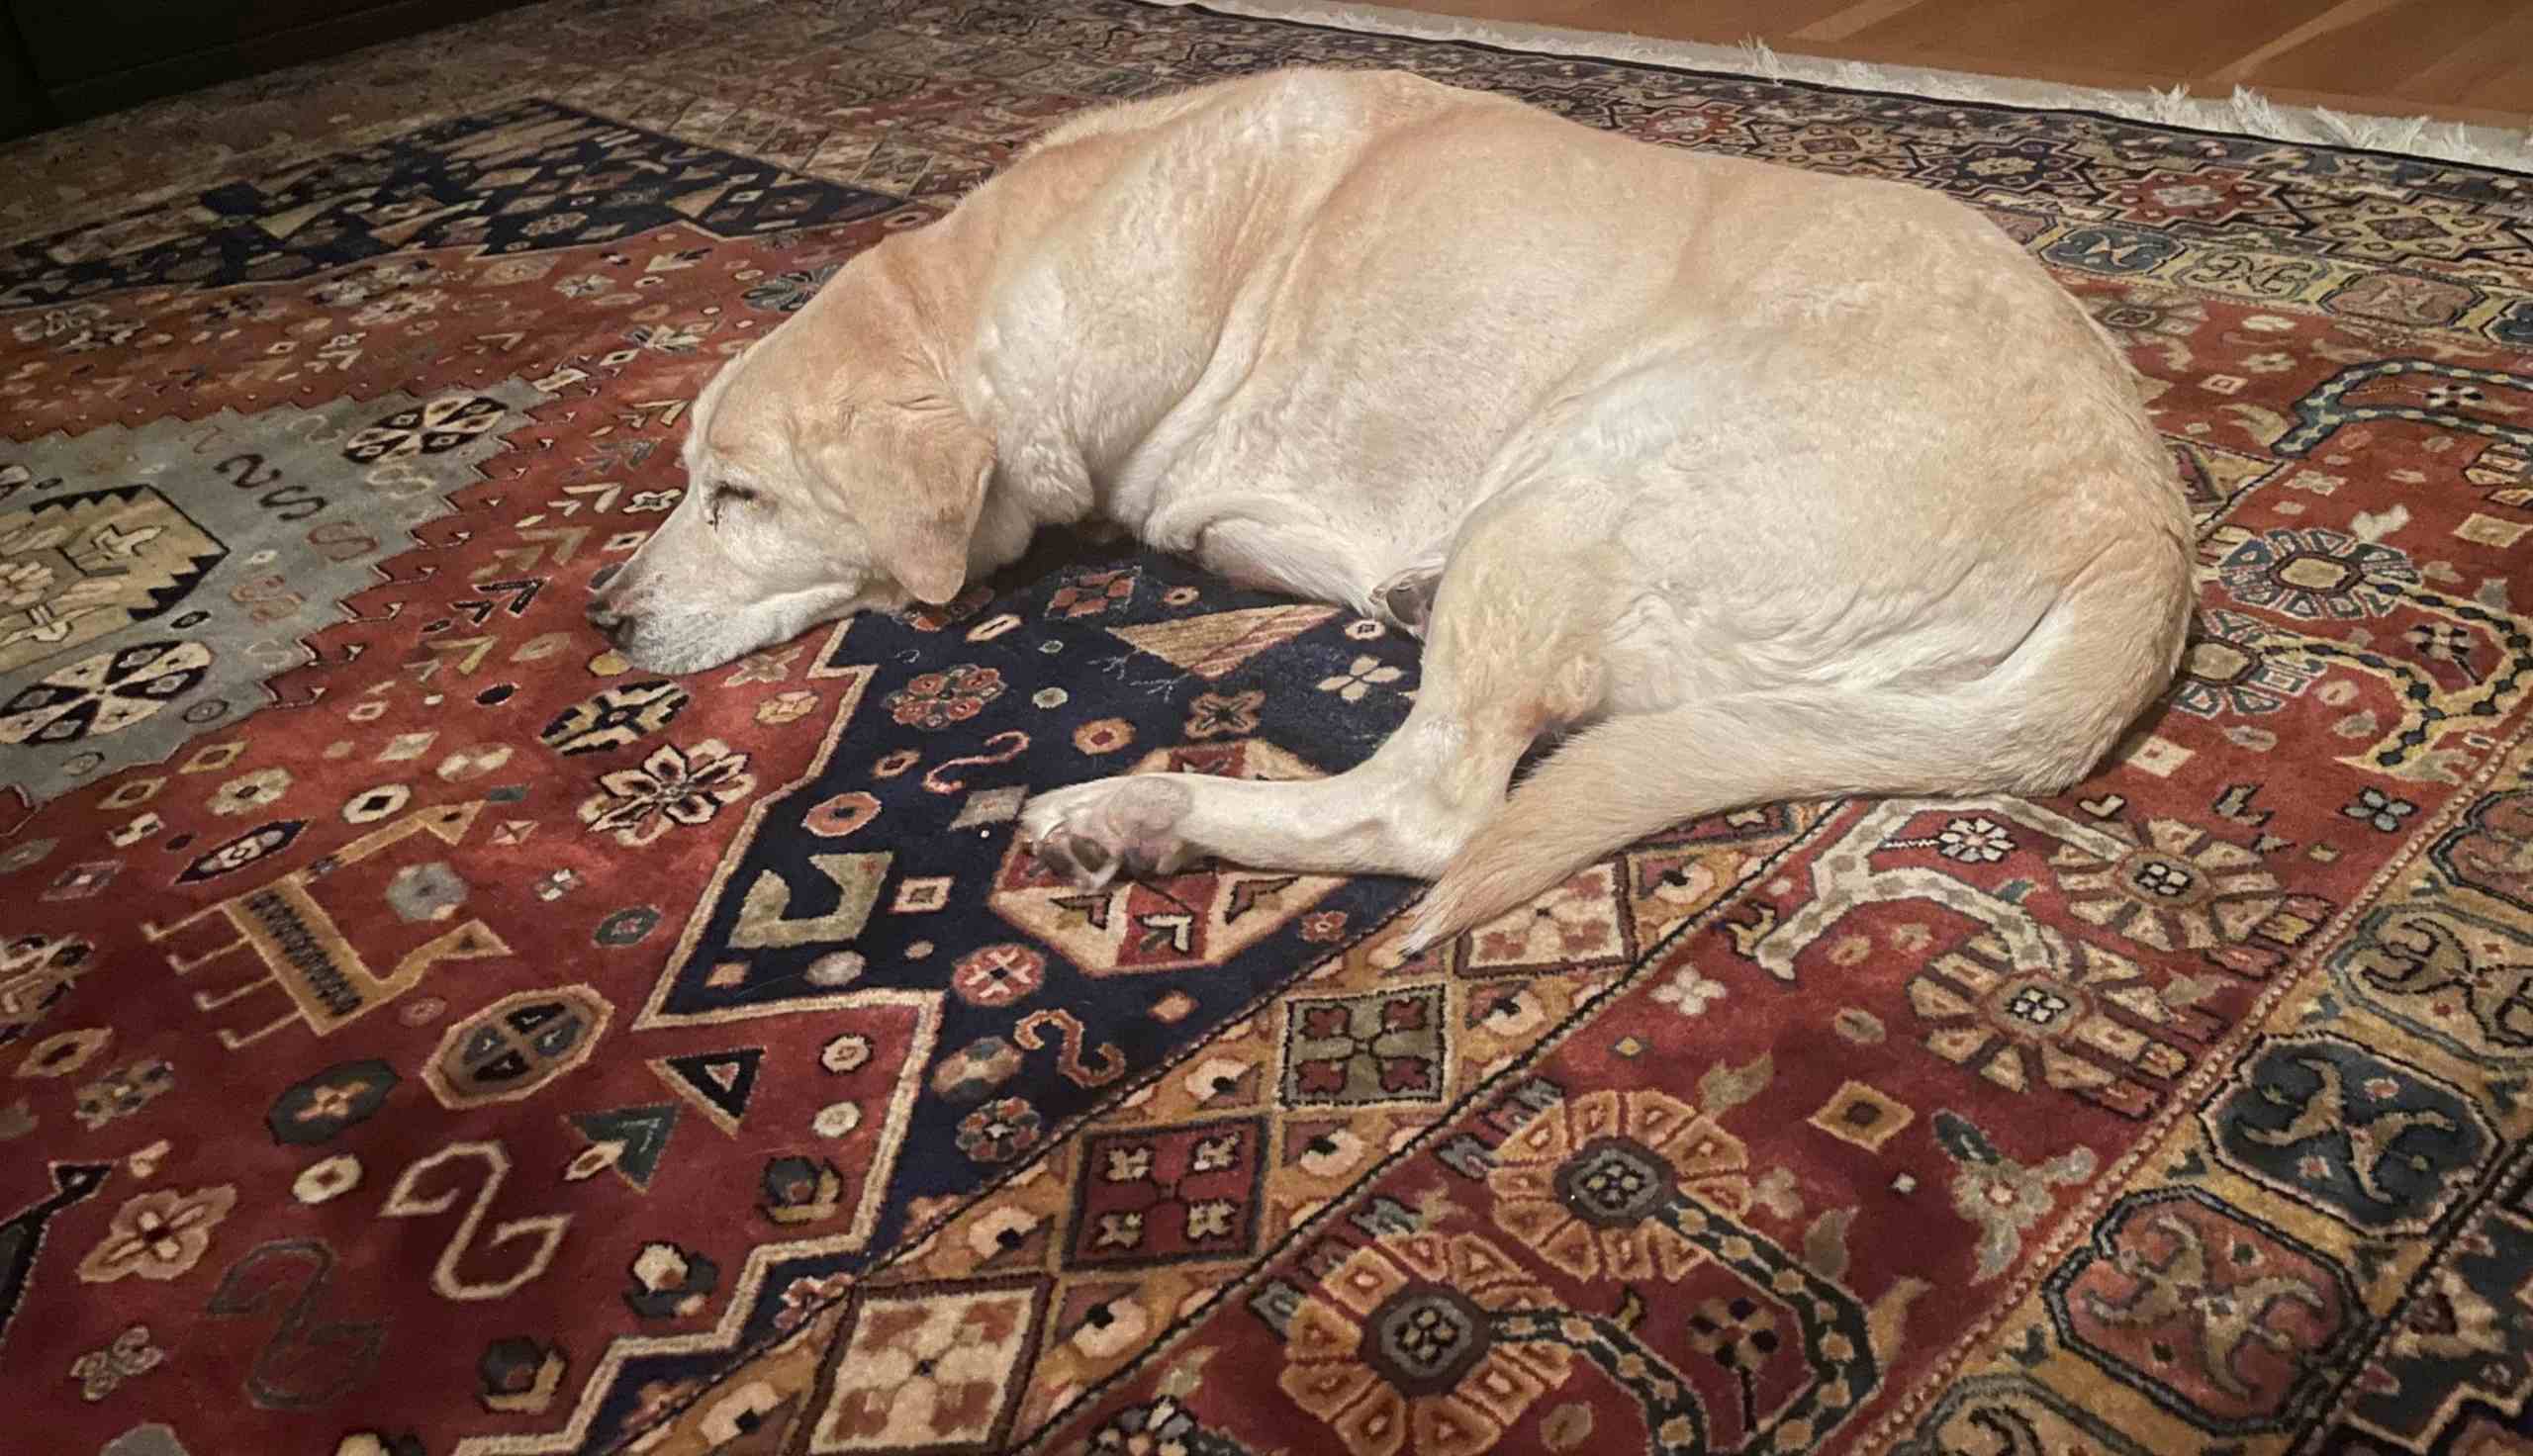 dog on carpet